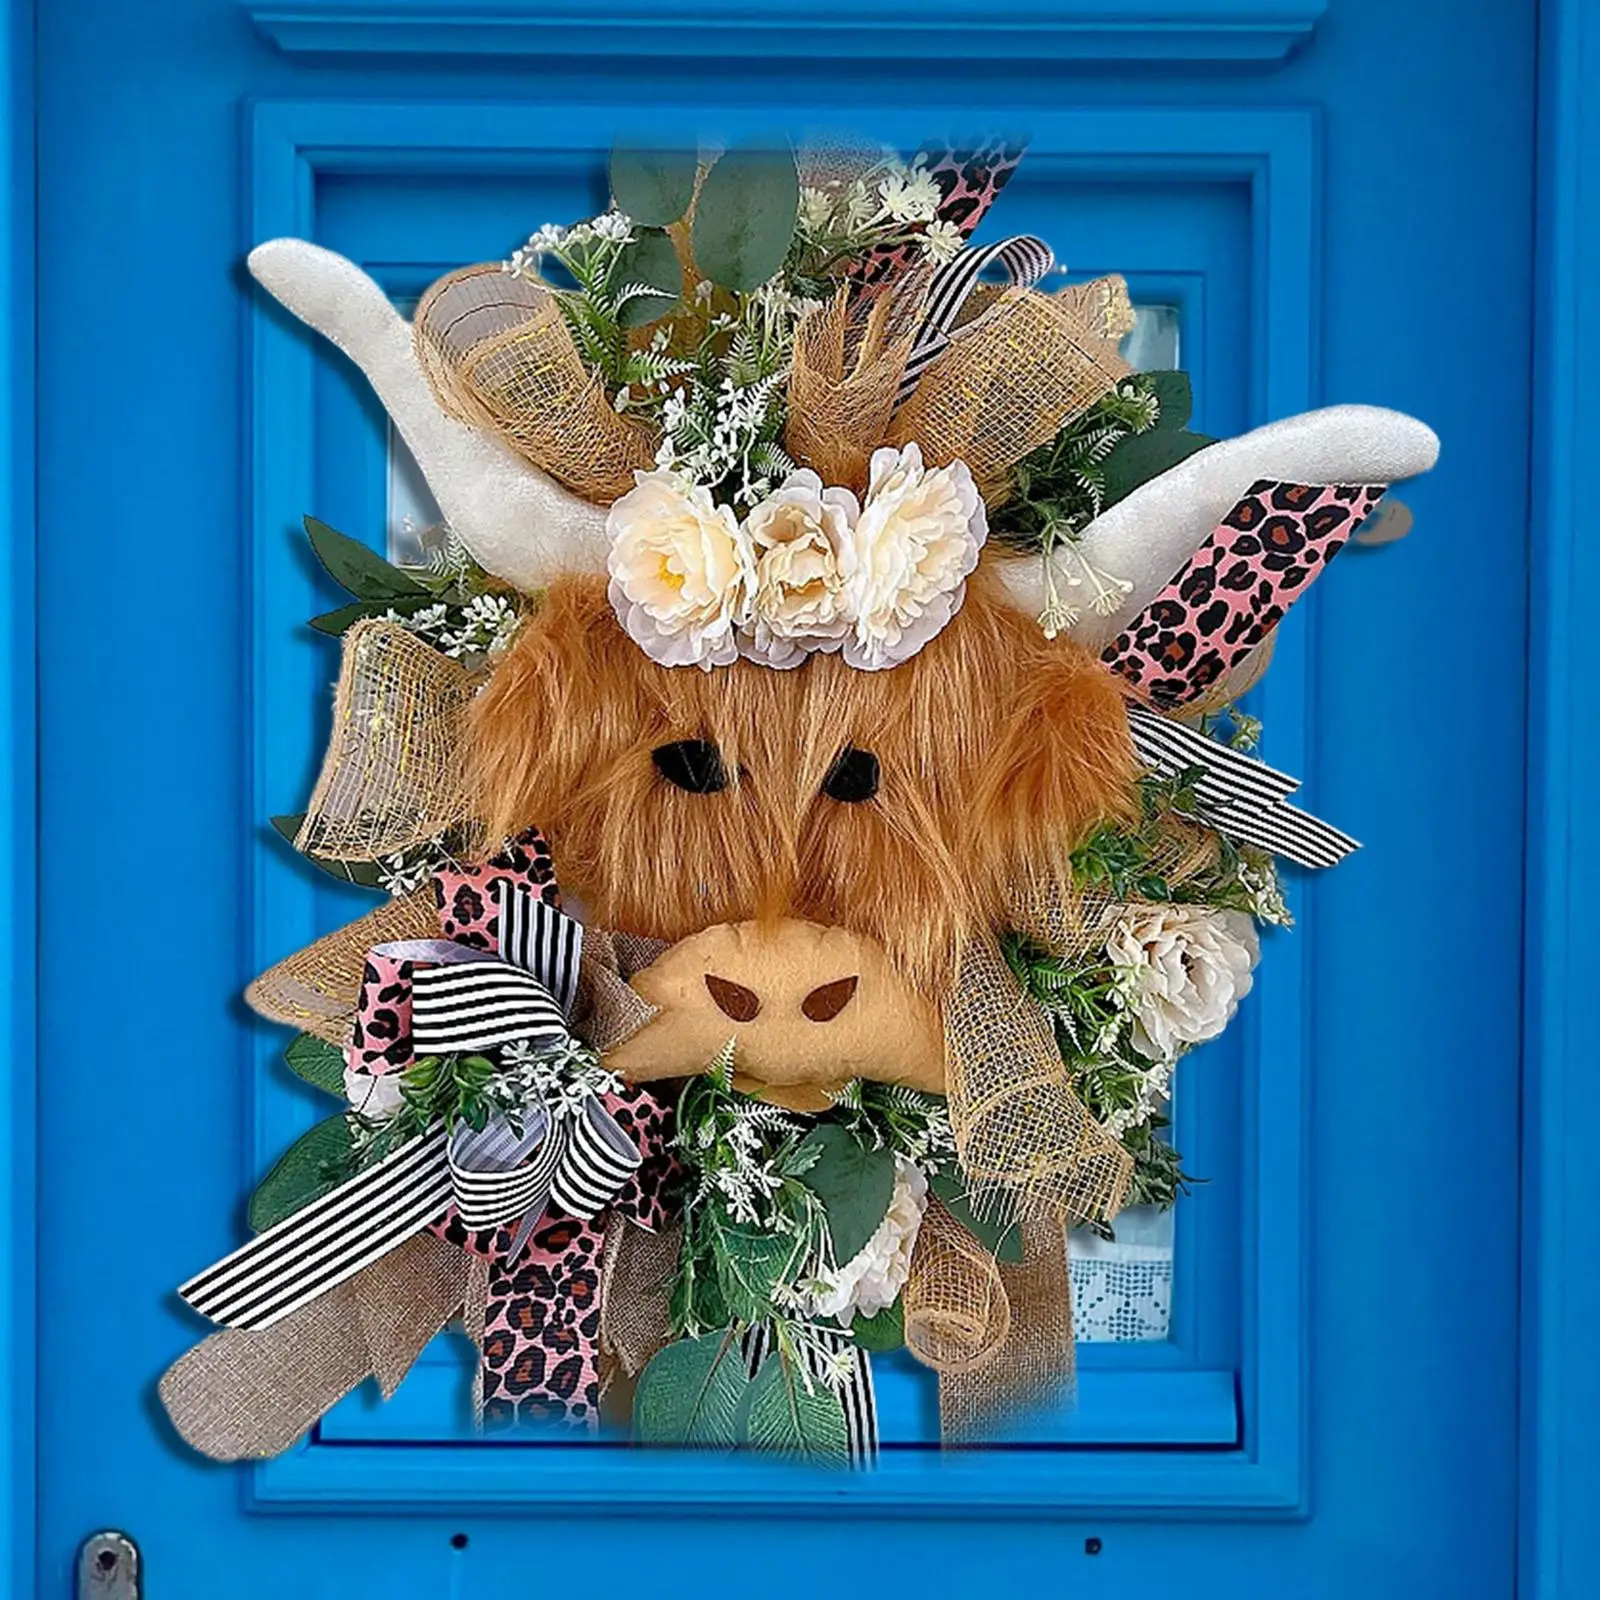 Cow Wreath Window Hanging Welcome sign Decor Wreath for Front Door Hanger Easter Artificial Flowers Garland 40cm